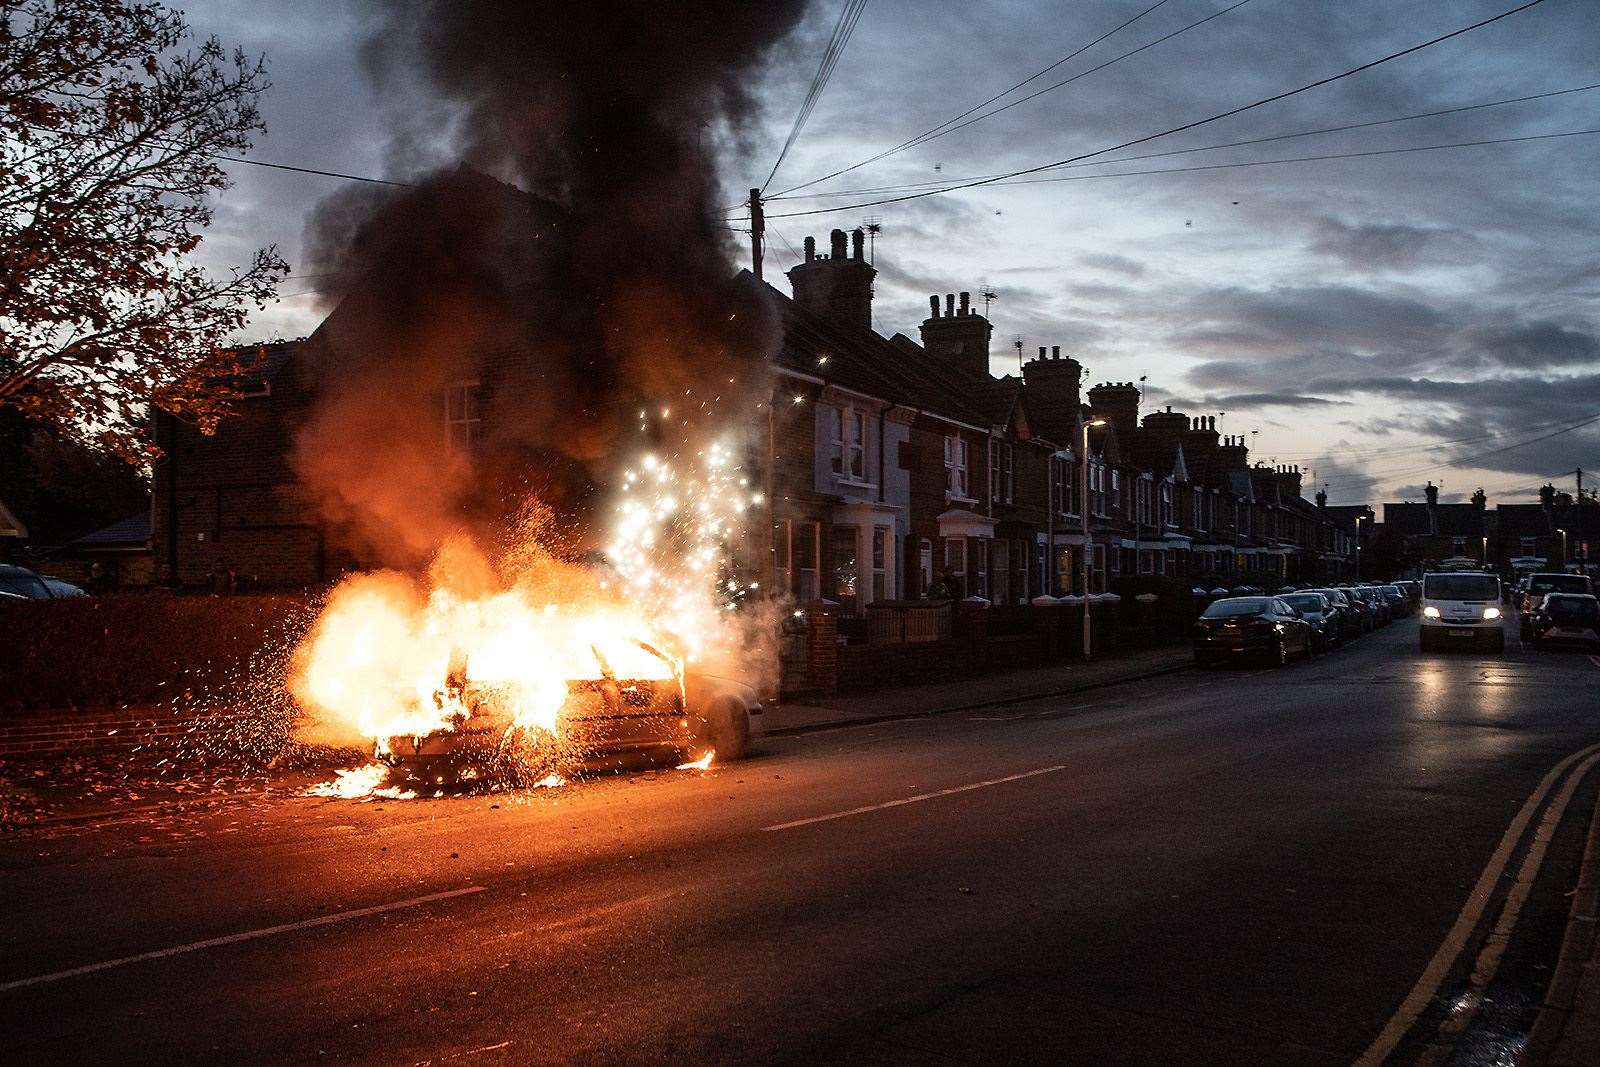 Sparks were flying off a car set on fire in Briton Street, Faversham @mrperou